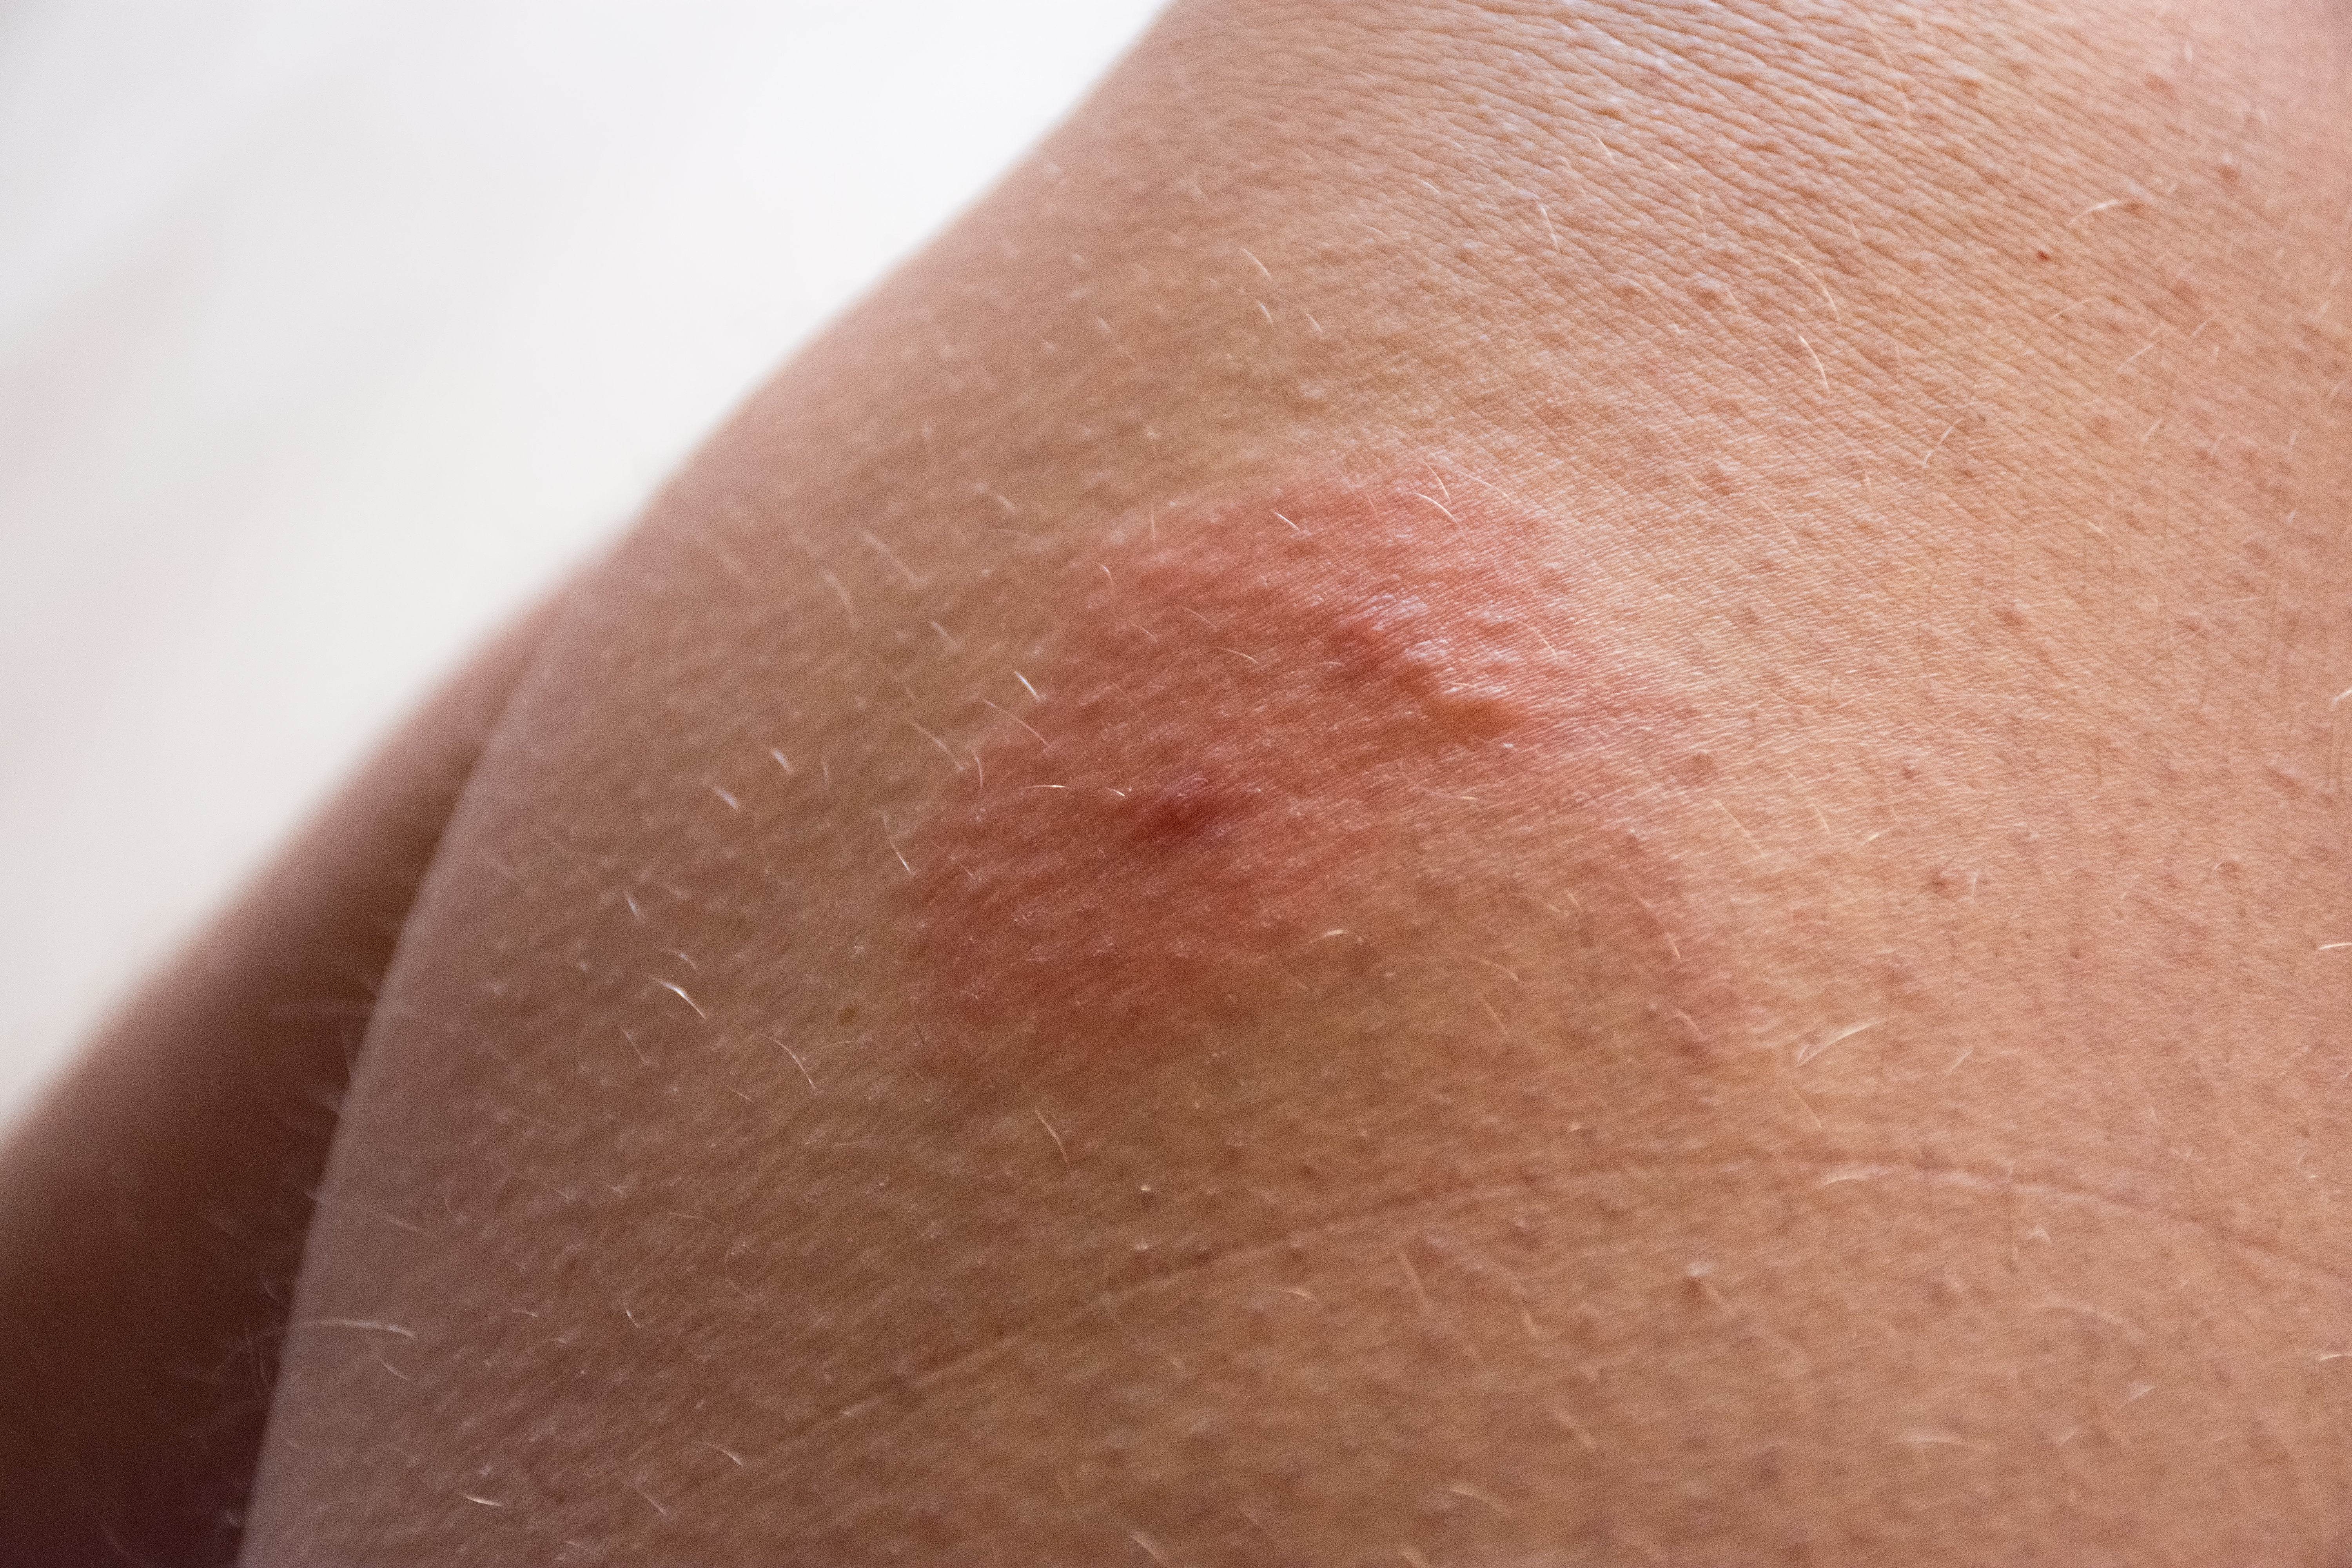 do flea bites itch more than mosquito bites